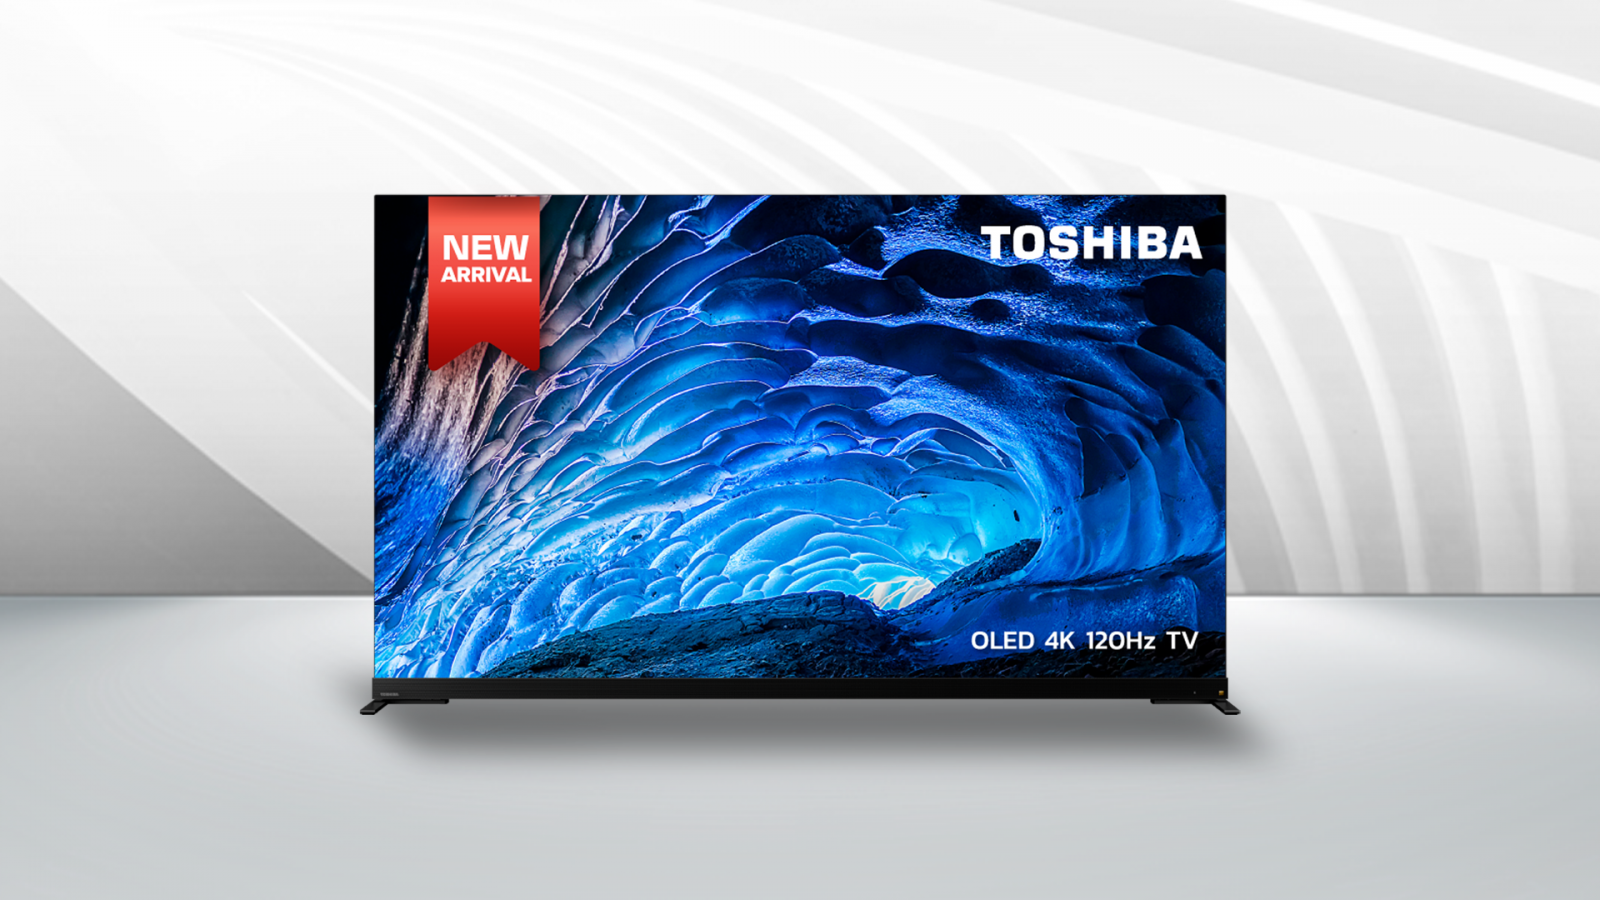 Product - Toshiba